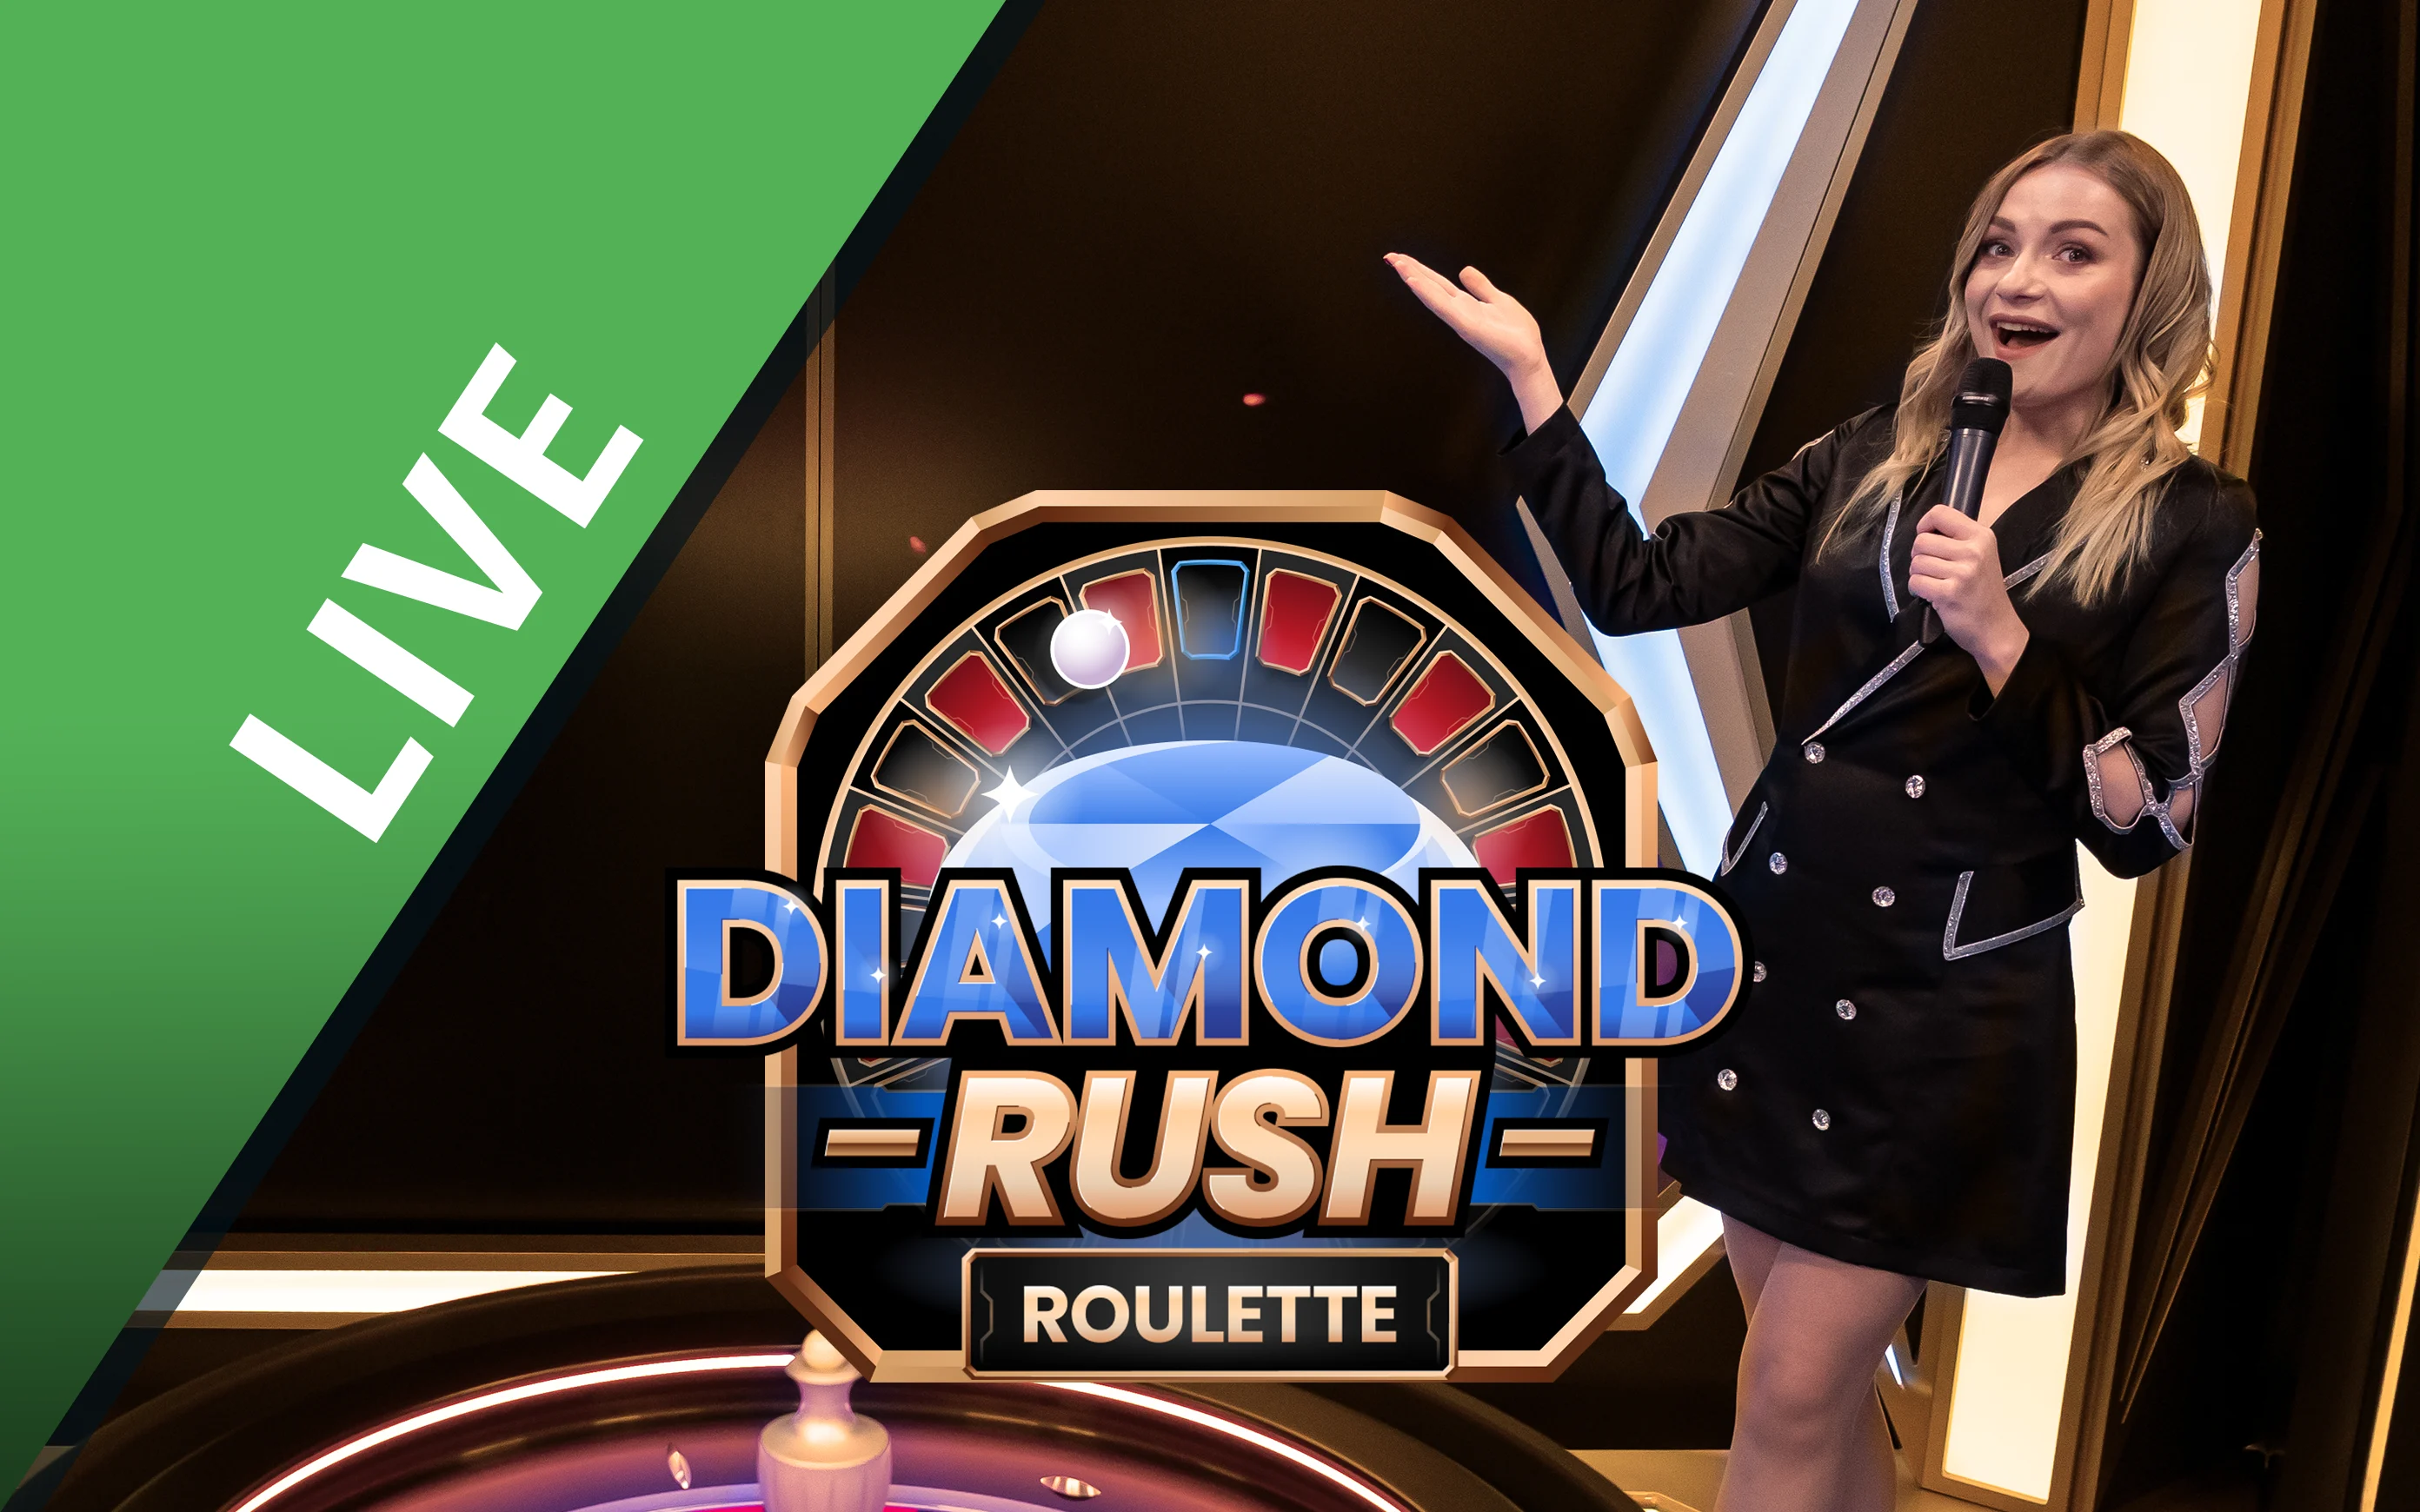 Starcasino.be online casino üzerinden Diamond Rush Roulette oynayın